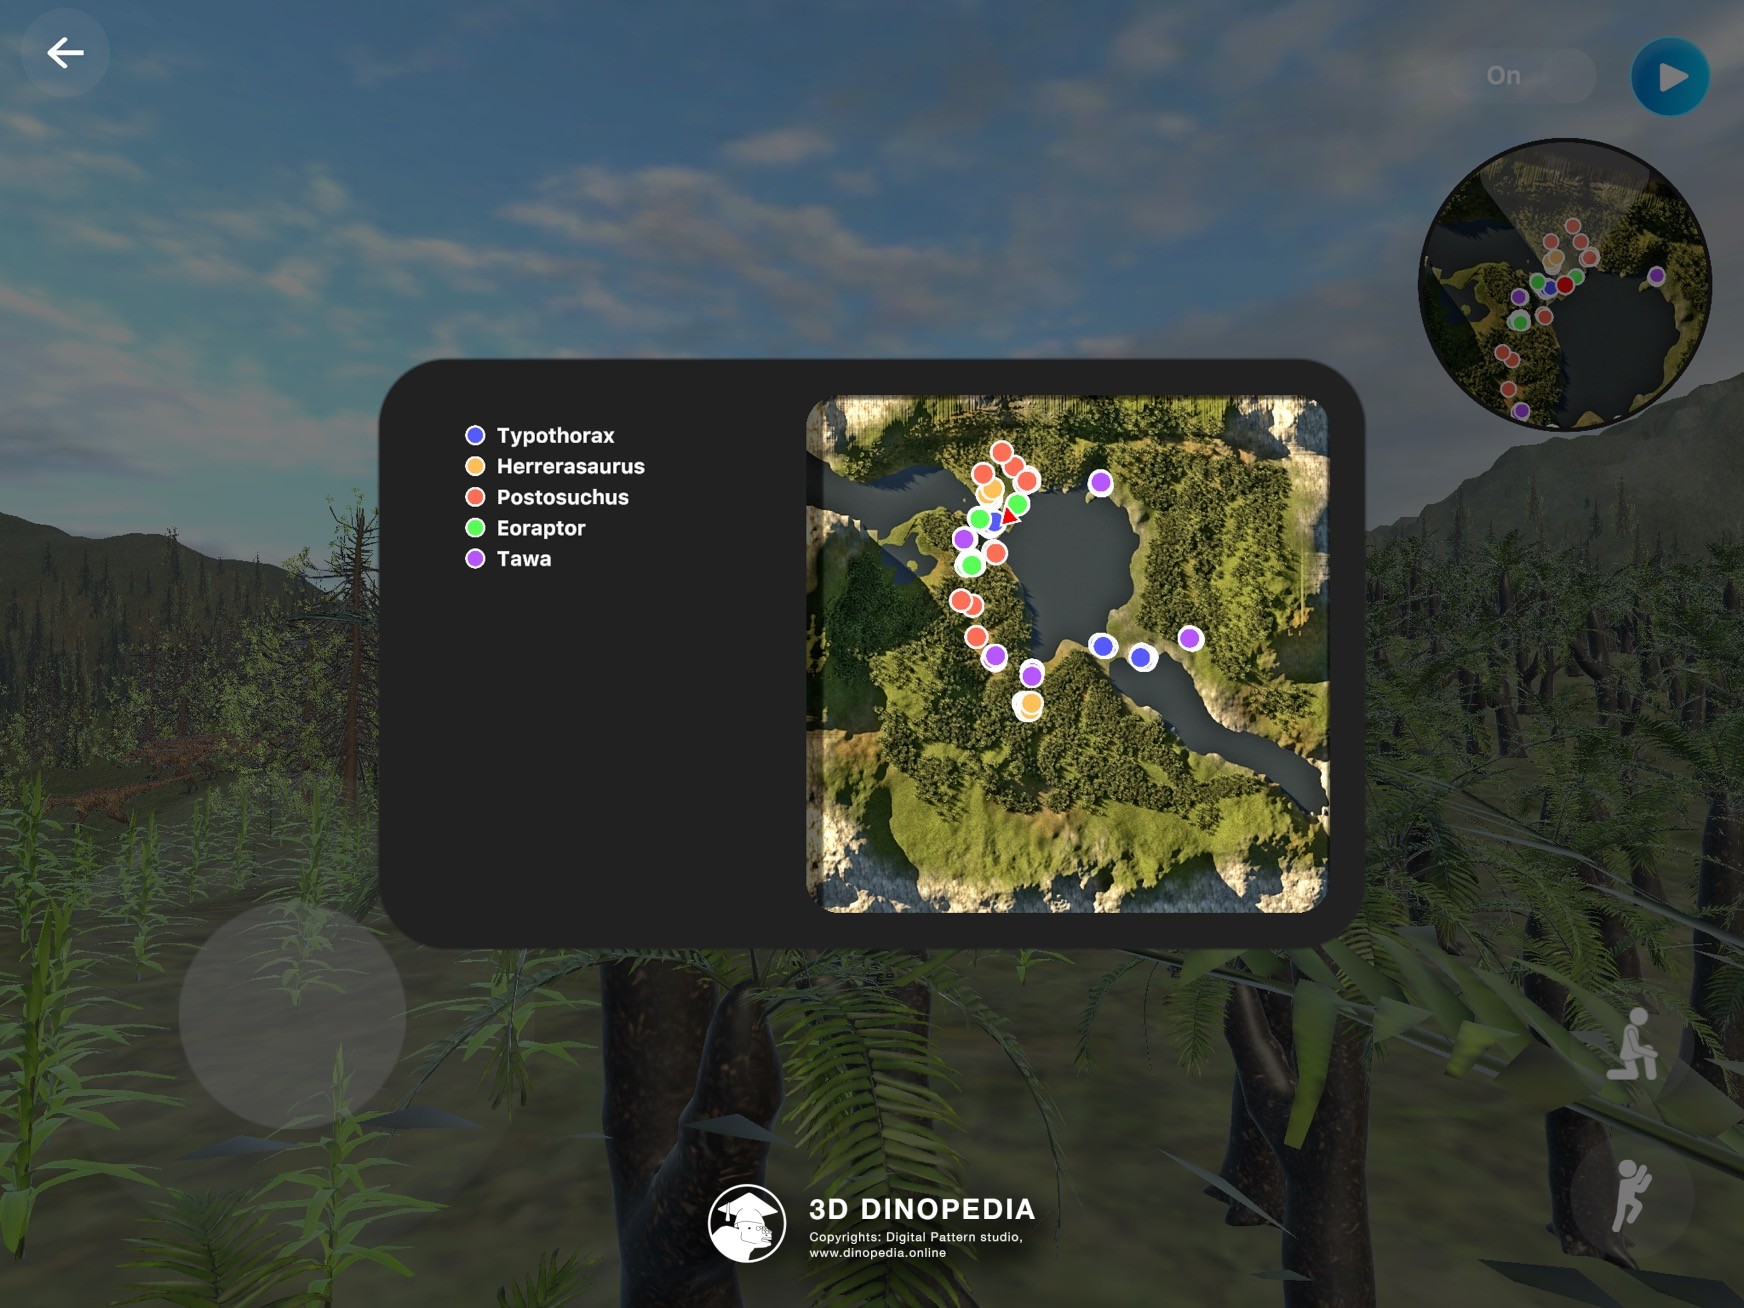 3D Dinopedia 3D Dinopedia 4.12: New Upgrades!